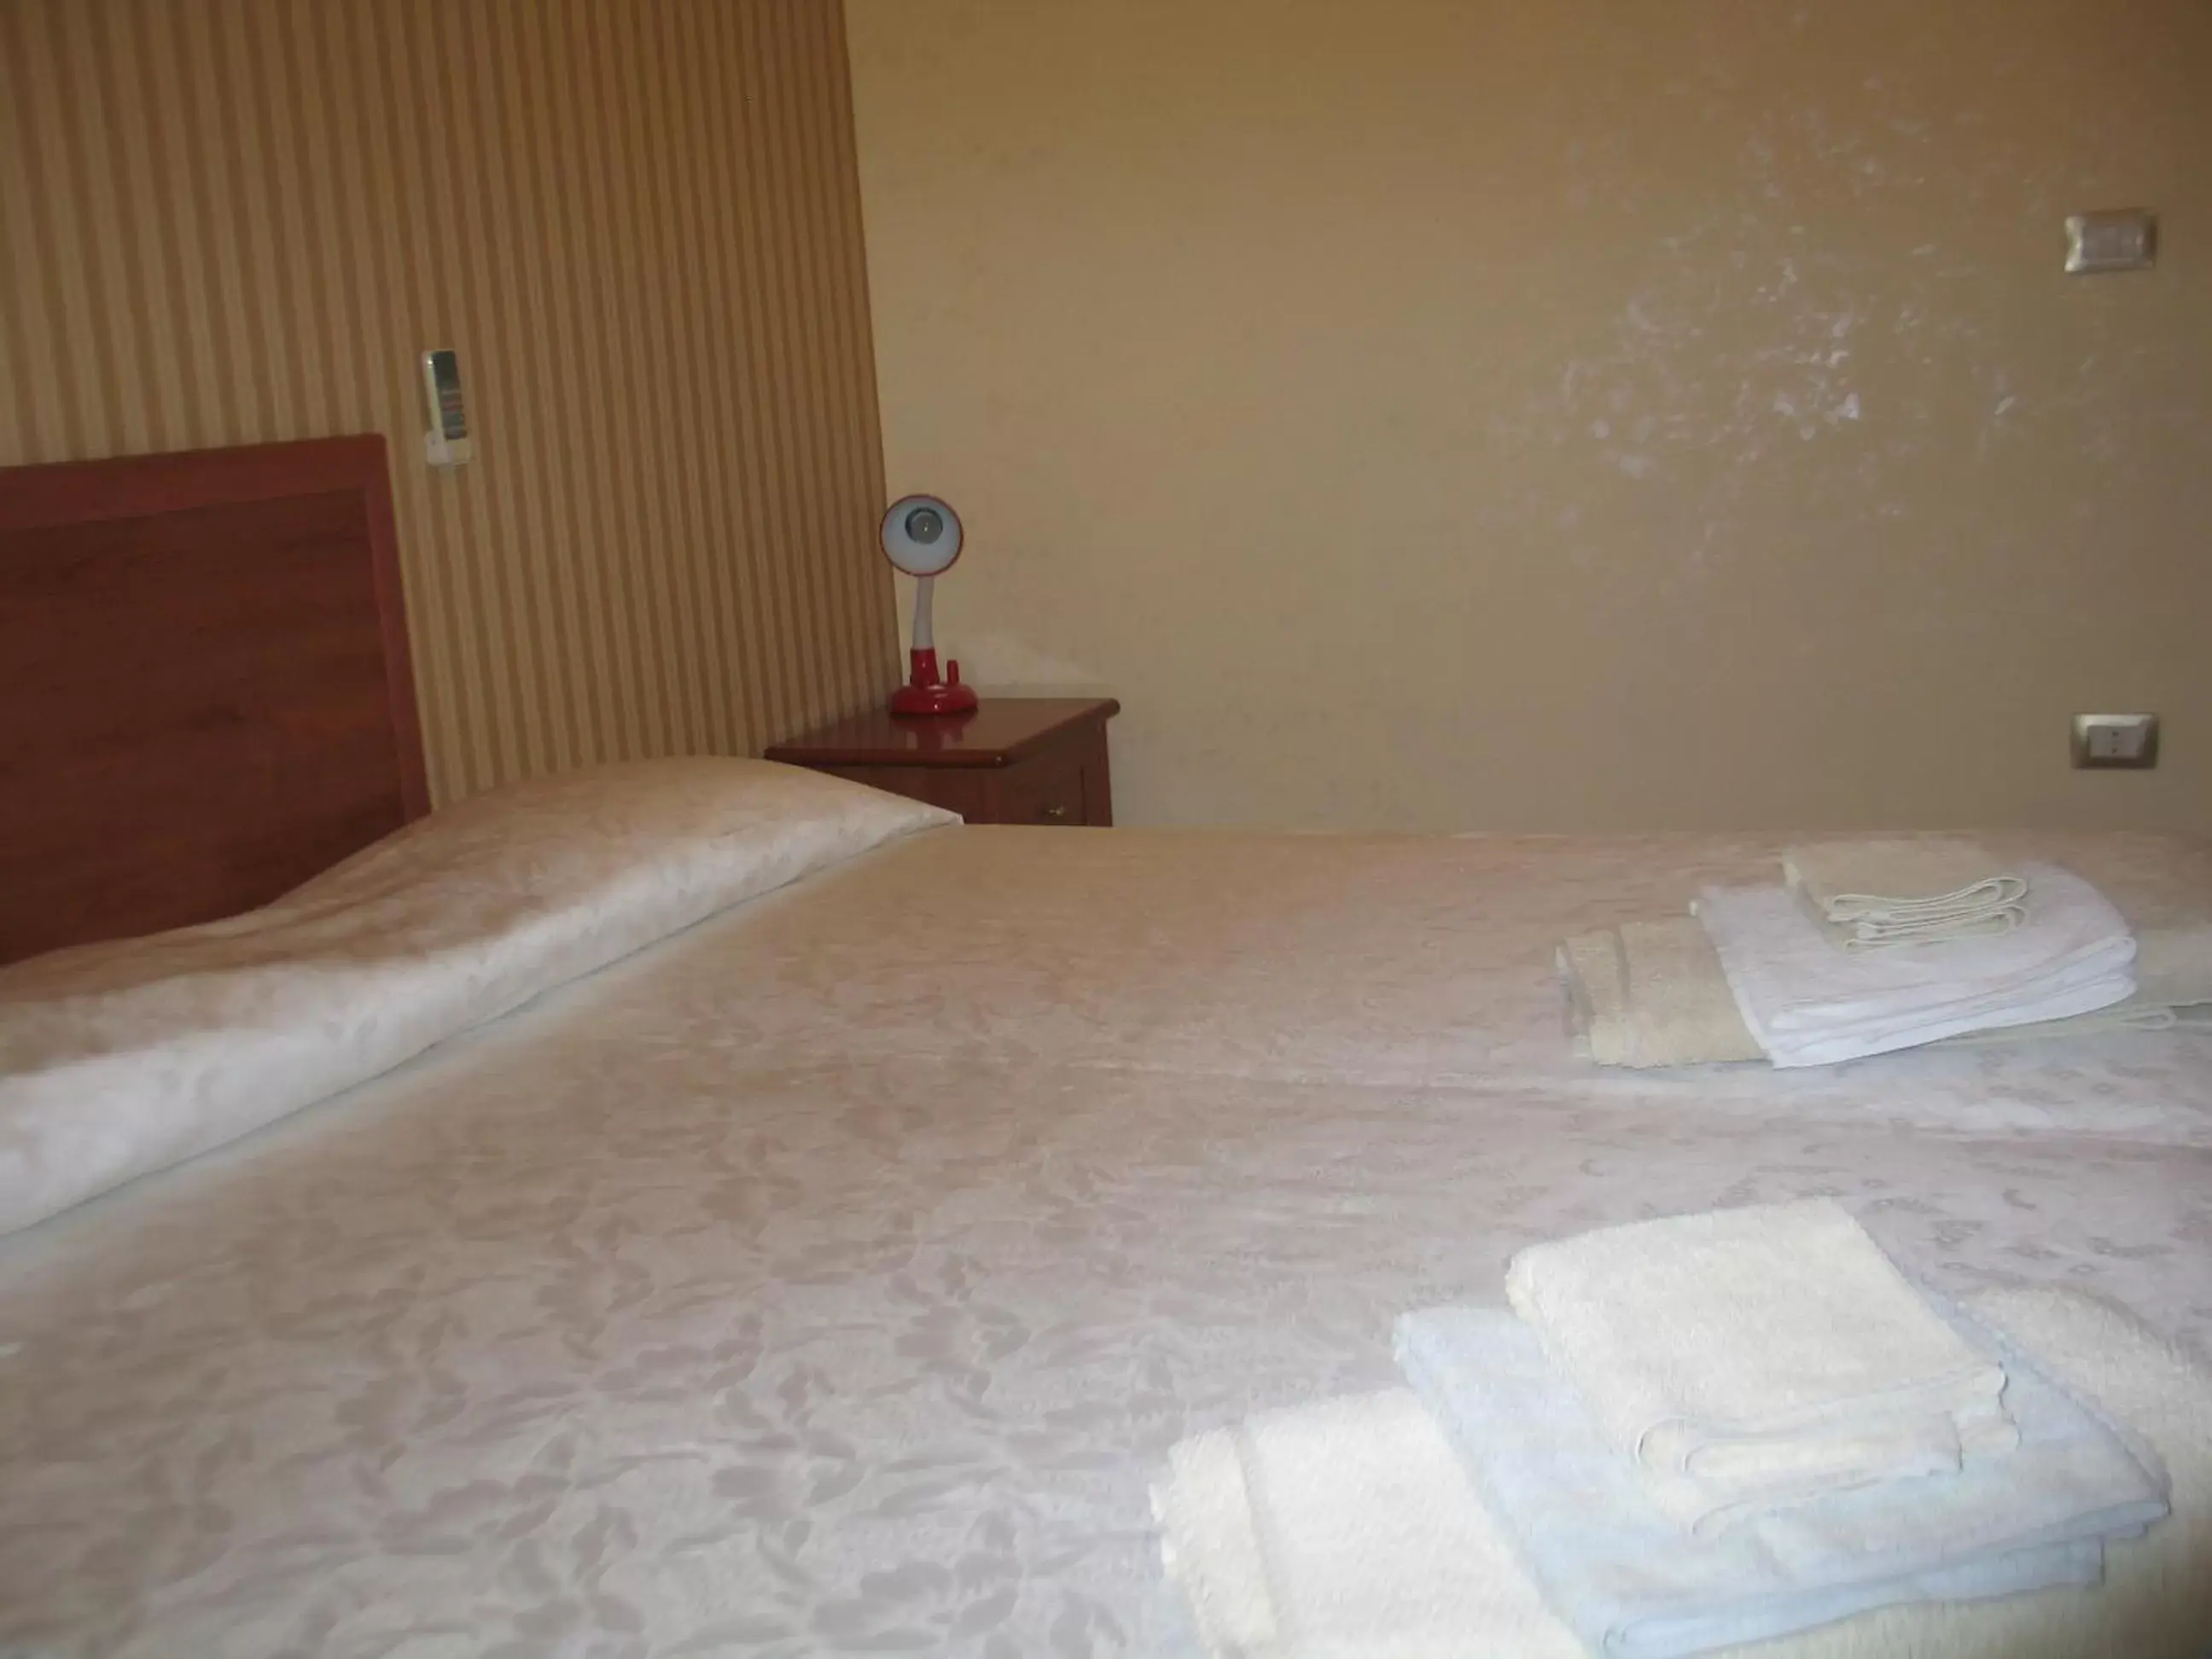 Bedroom, Room Photo in Hotel Bed & Breakfast Minu'